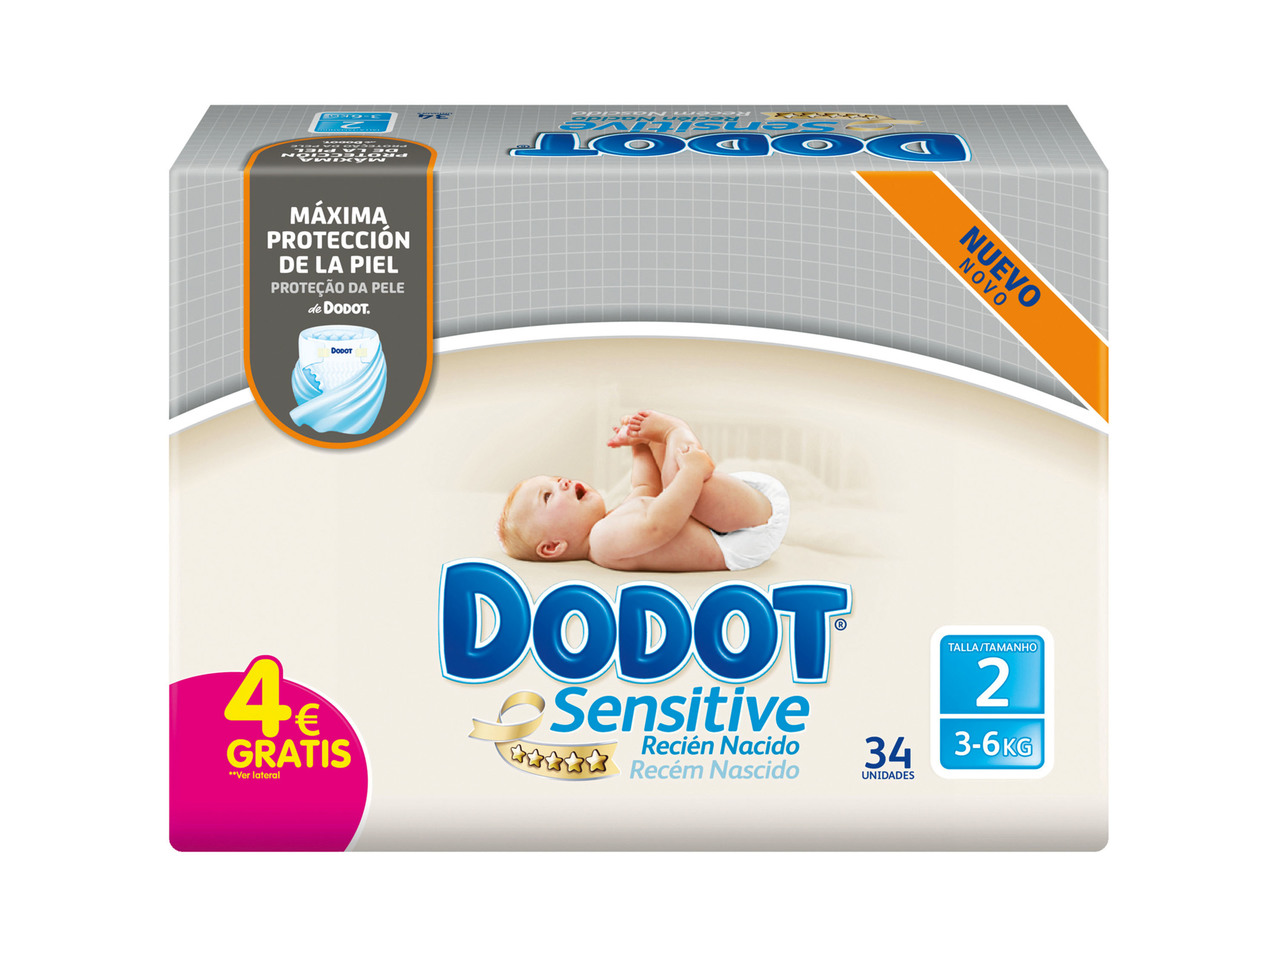 DODOT(R) Dodot Sensitive Recém Nascido 3-6 KG